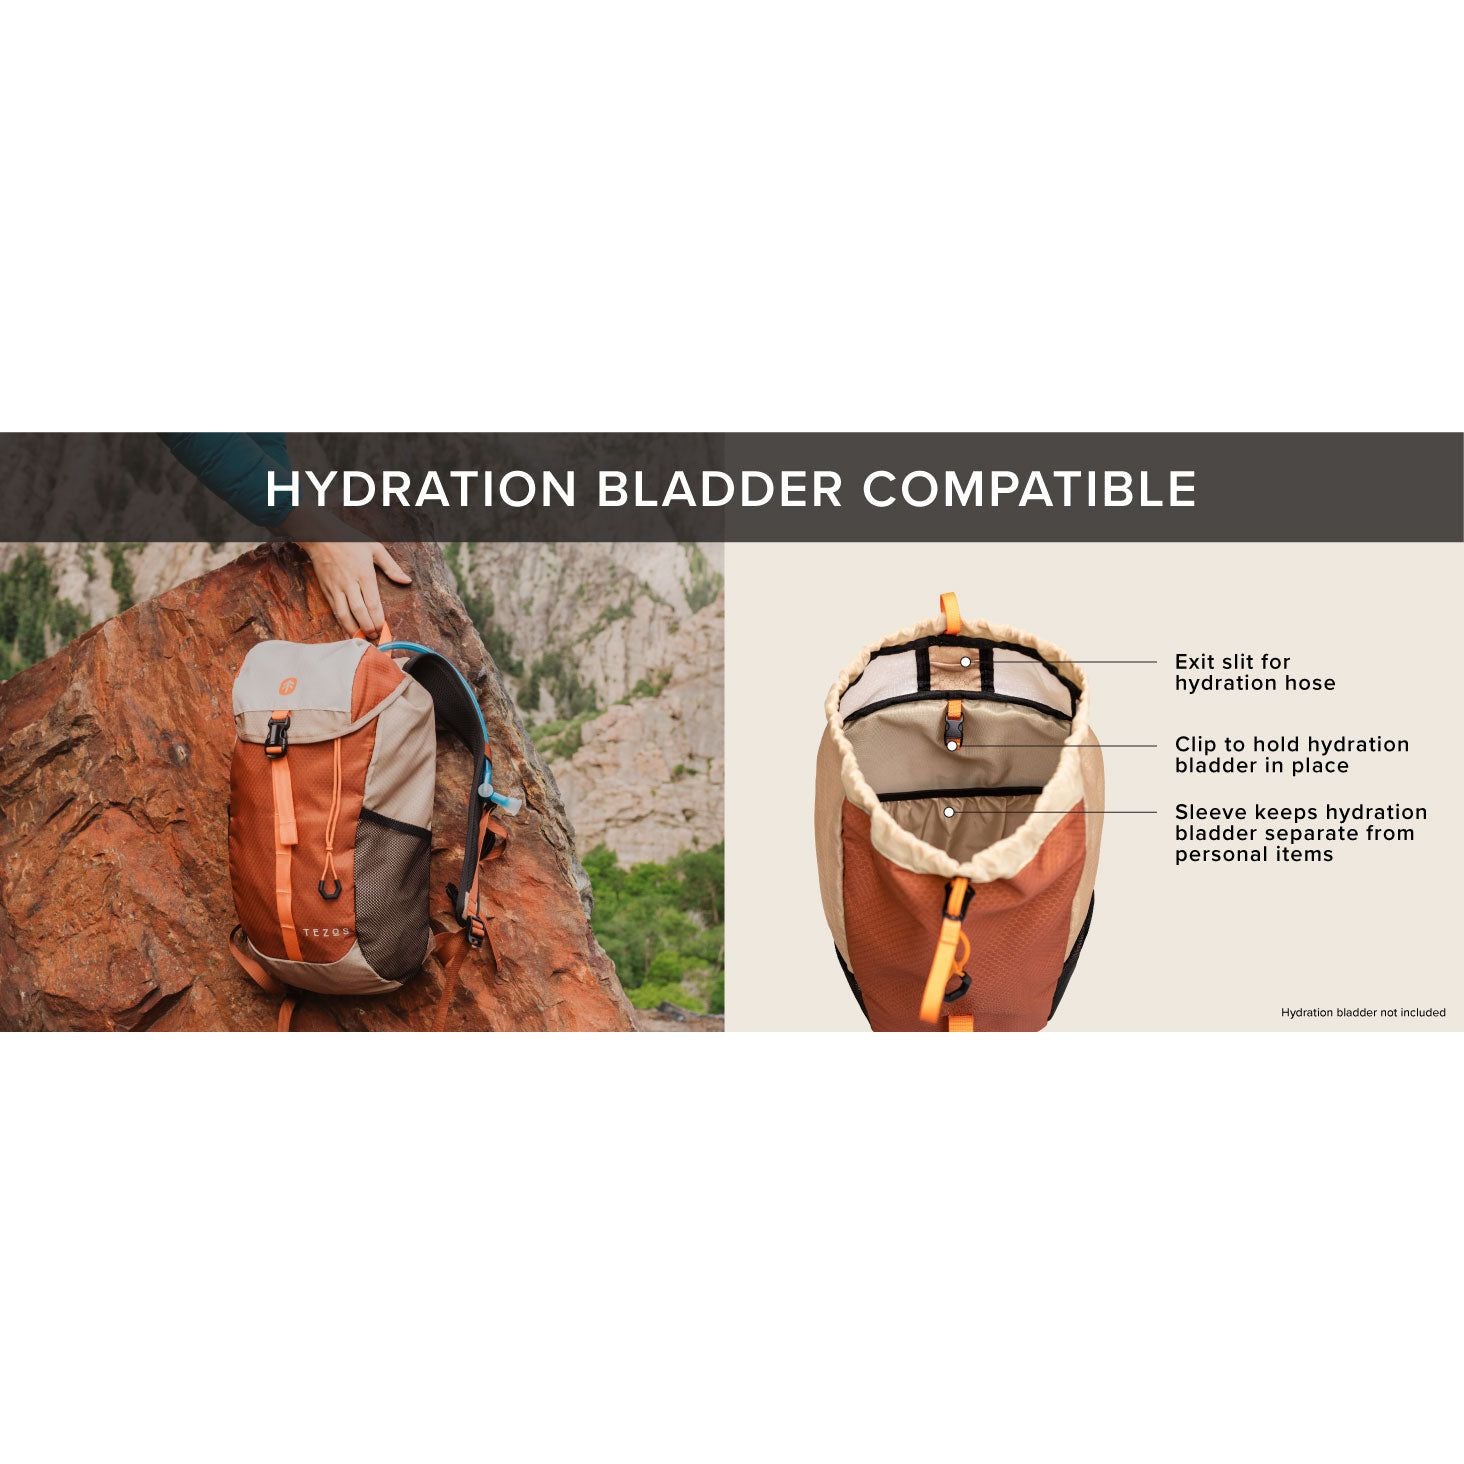 Juniper Lightweight Hiking and Hydration BackPack 16 Liter